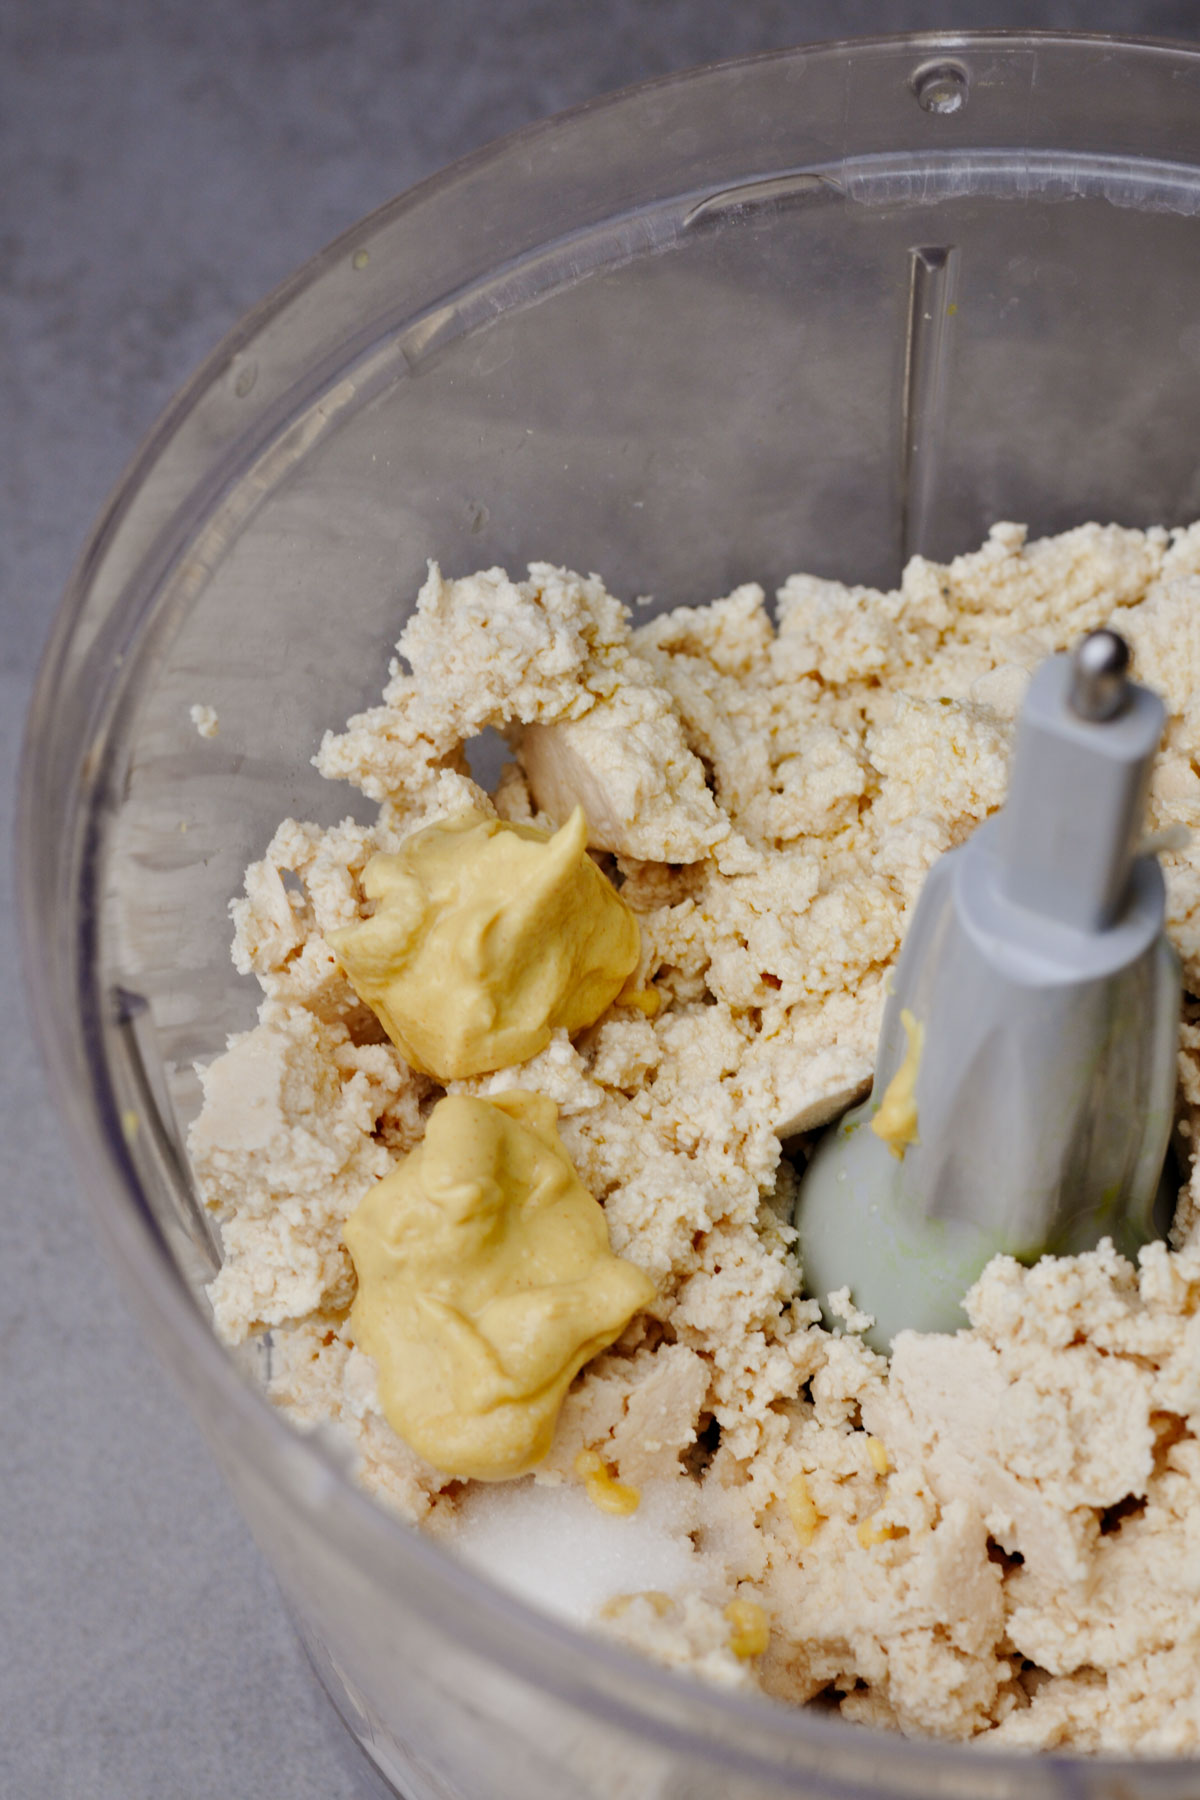 Crumbled tofu, Dijon mustard and salt in a food processor